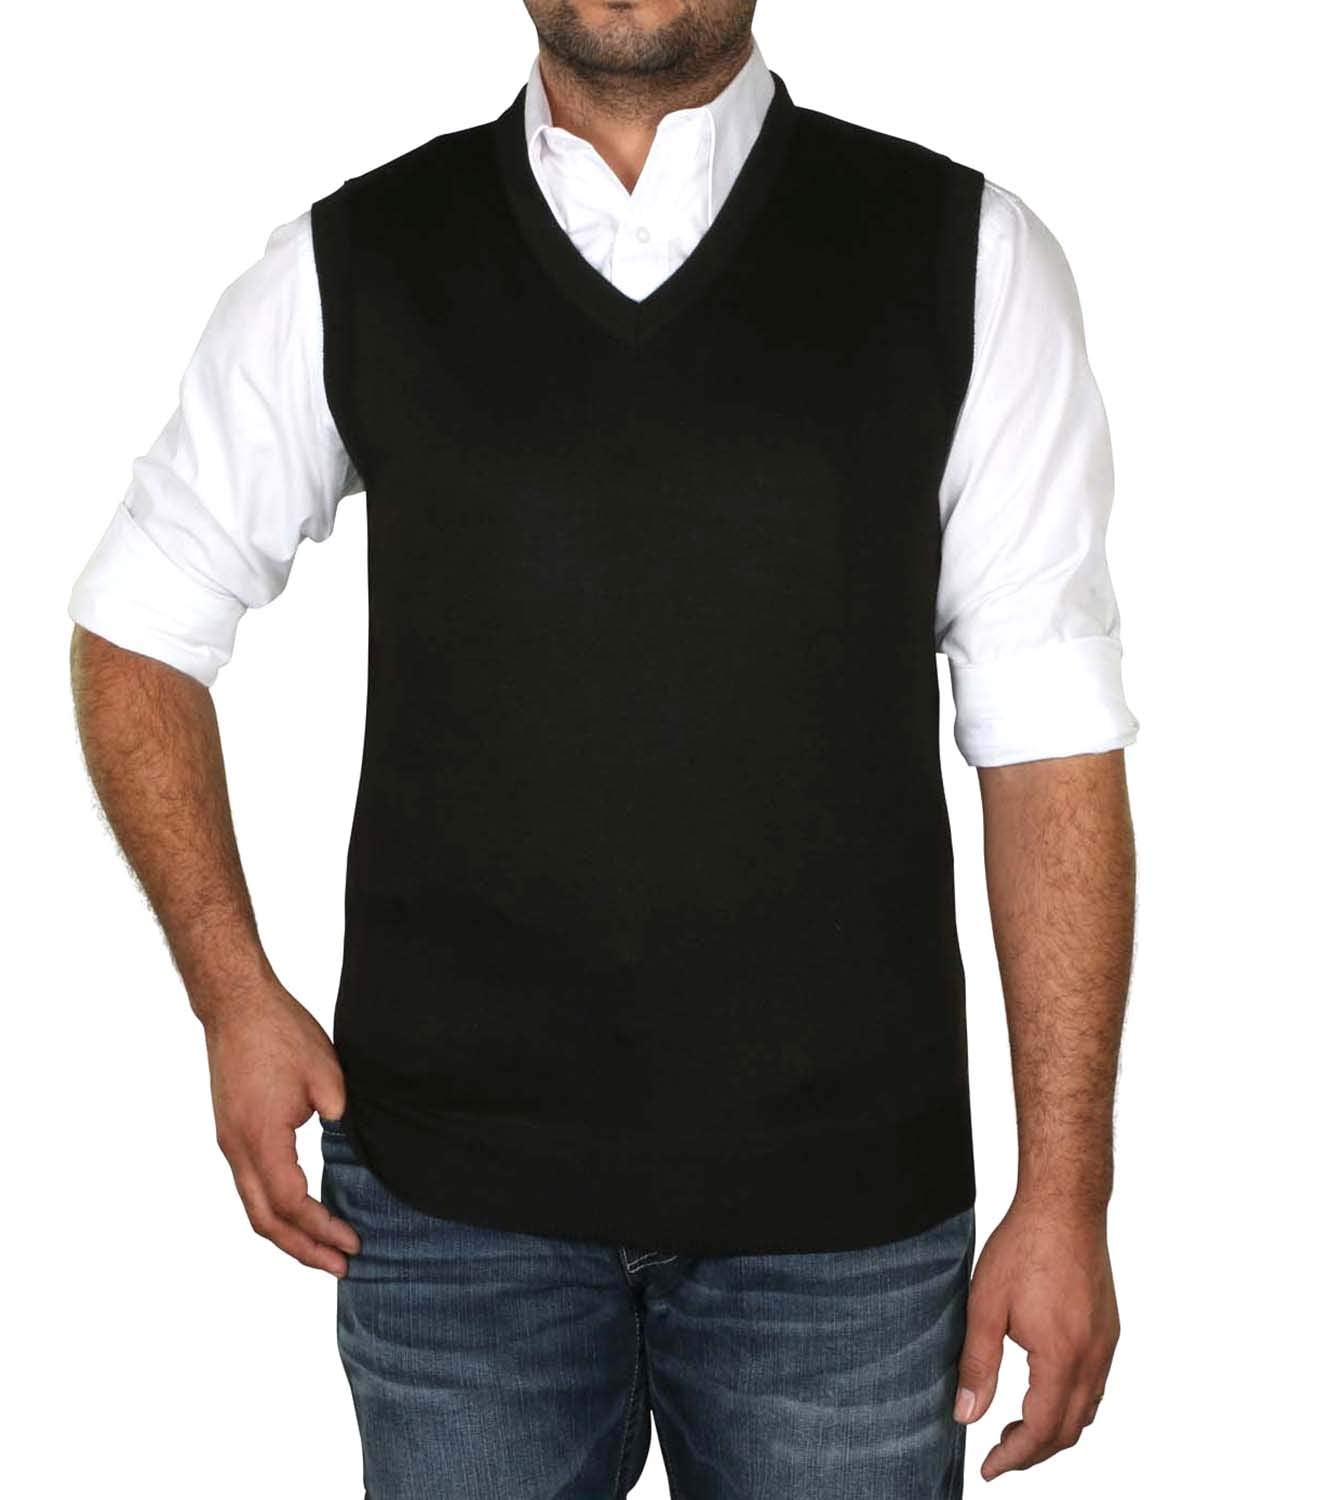 True Rock Men's Argyle V-Neck Sweater Vest (Navy/Tan/Blue, X-Large